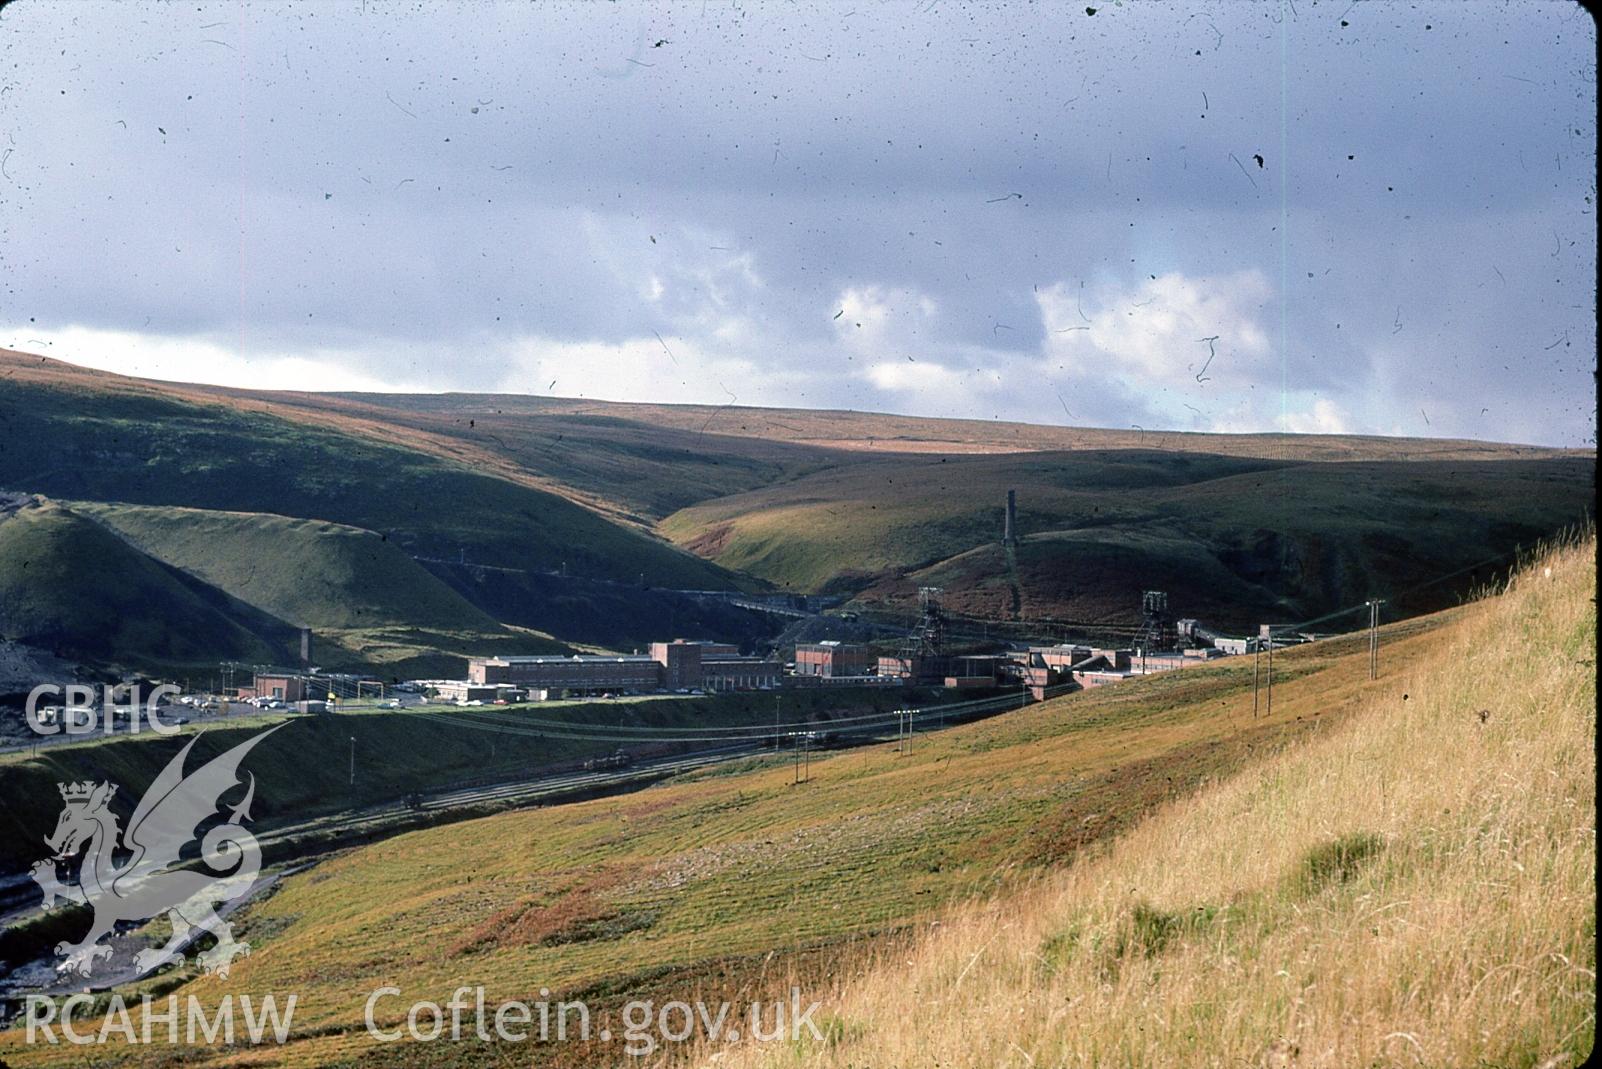 Digital photograph showing Mardy colliery in surrounding landscape, taken 1978